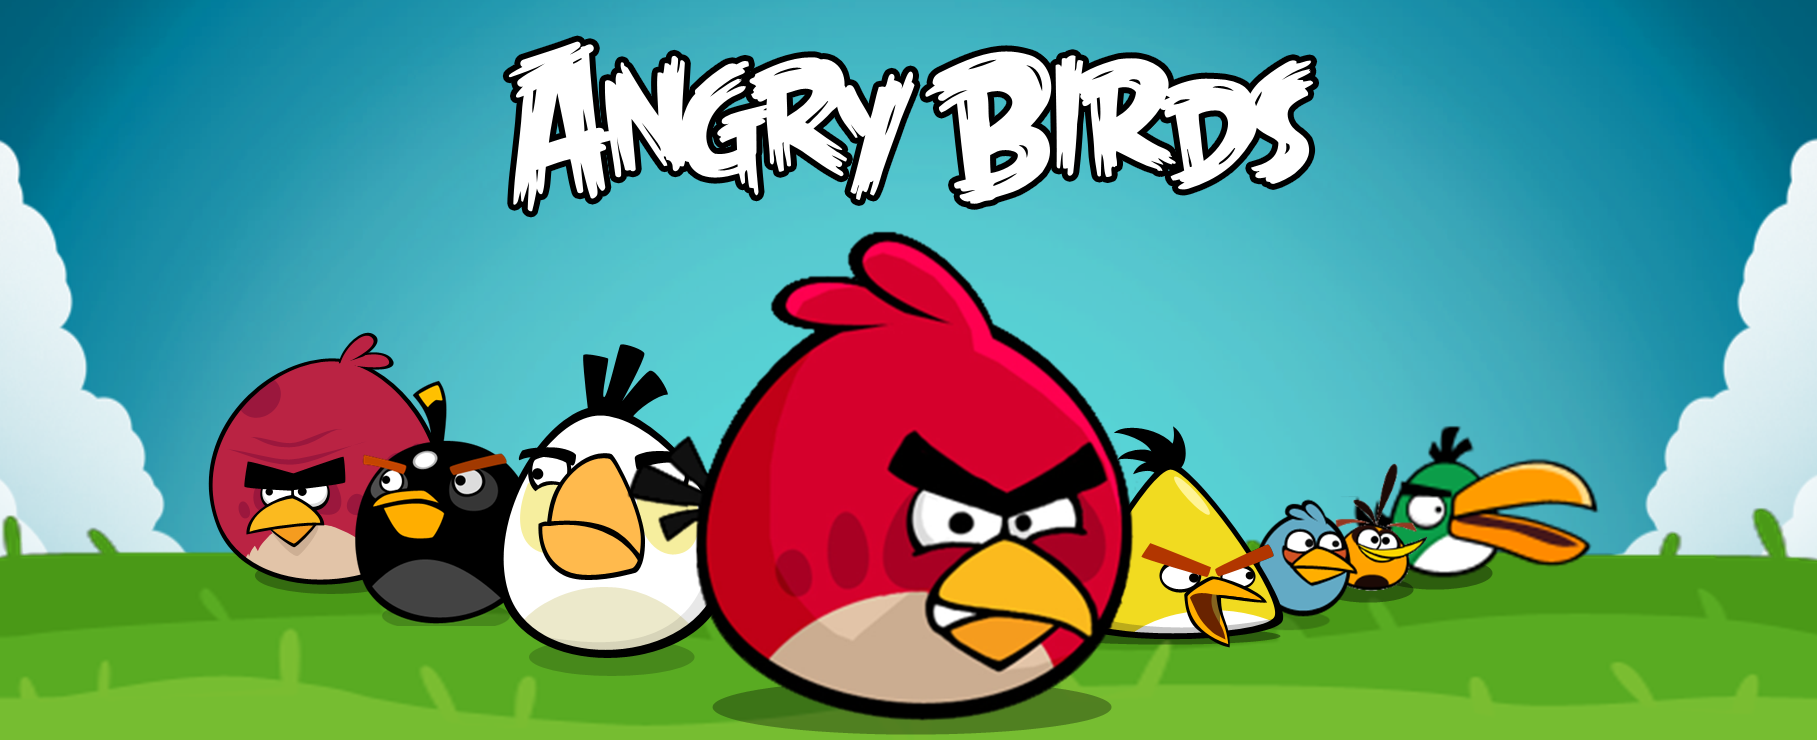 سازندگان Angry Birds متحمل ضرر شدند